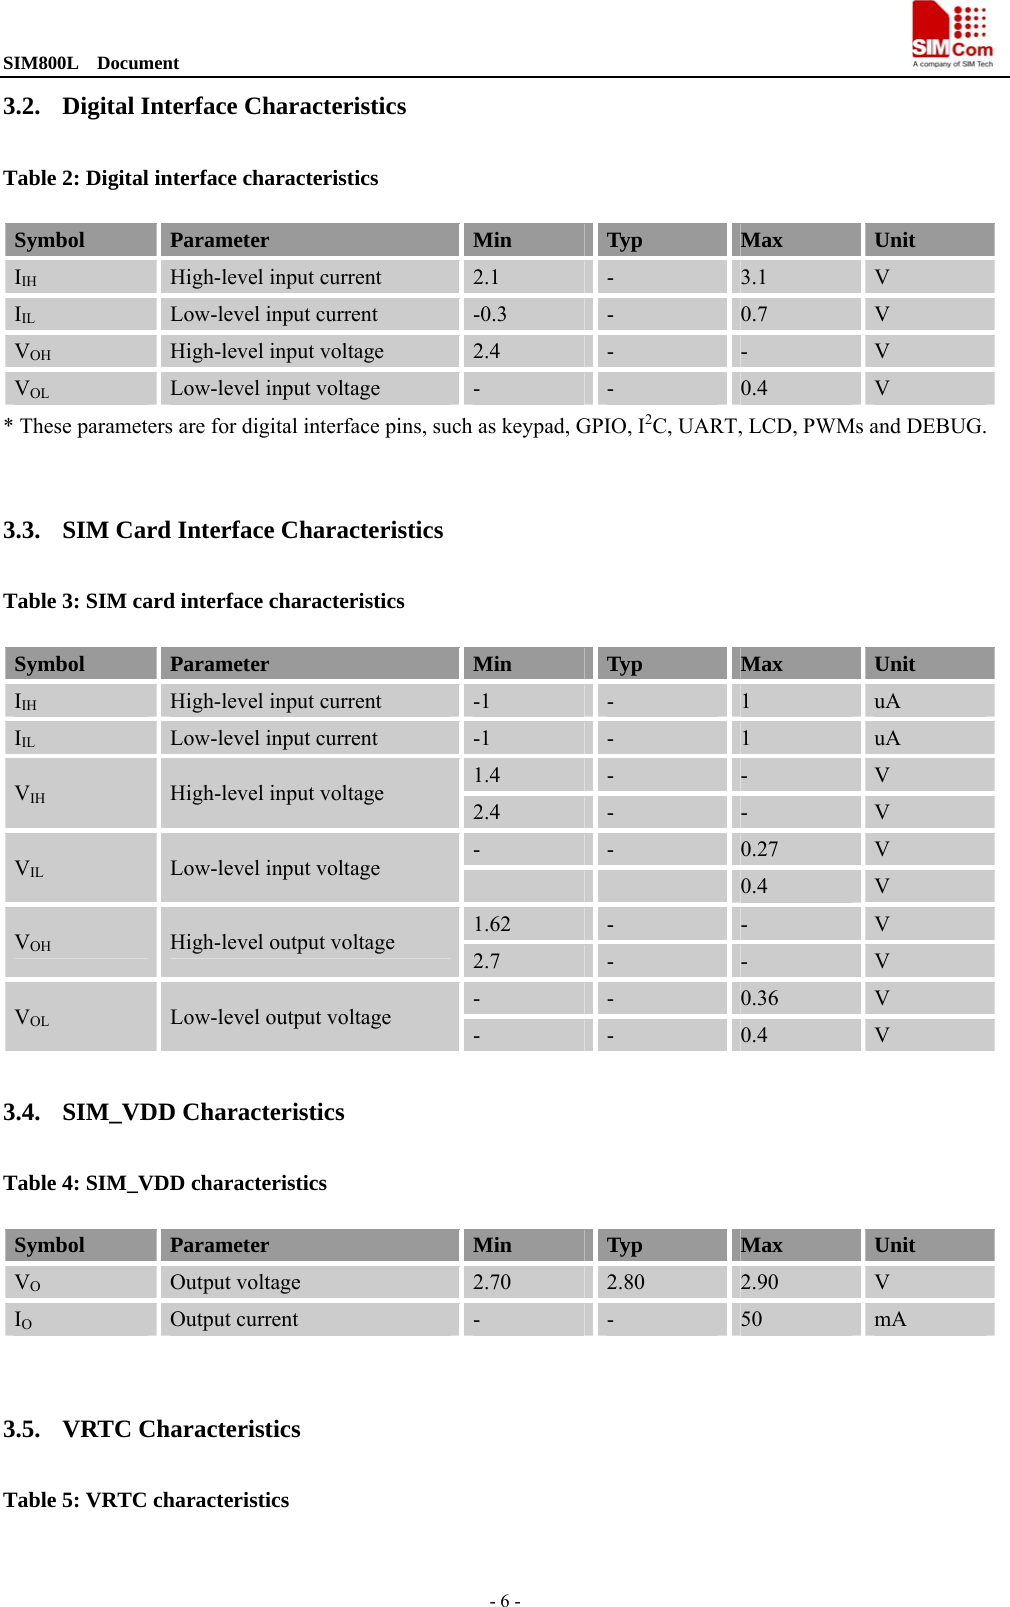 SIM800L  Document                                                                                - 6 - 3.2. Digital Interface Characteristics Table 2: Digital interface characteristics Symbol  Parameter  Min  Typ  Max  Unit IIH High-level input current  2.1  -  3.1  V IIL Low-level input current  -0.3  -  0.7  V VOH High-level input voltage  2.4  -  -  V VOL Low-level input voltage  -  -  0.4  V * These parameters are for digital interface pins, such as keypad, GPIO, I2C, UART, LCD, PWMs and DEBUG.  3.3. SIM Card Interface Characteristics Table 3: SIM card interface characteristics Symbol  Parameter  Min  Typ  Max  Unit IIH High-level input current  -1  -  1  uA IIL Low-level input current  -1  -  1  uA VIH High-level input voltage  1.4  -  -  V 2.4  -  -  V VIL Low-level input voltage  -  -  0.27  V   0.4  V VOH High-level output voltage  1.62  -  -  V 2.7  -  -  V VOL Low-level output voltage  -  -  0.36  V -  -  0.4  V 3.4. SIM_VDD Characteristics Table 4: SIM_VDD characteristics Symbol  Parameter  Min  Typ  Max  Unit VO Output voltage  2.70  2.80  2.90  V IO Output current  -  -  50  mA  3.5. VRTC Characteristics Table 5: VRTC characteristics 